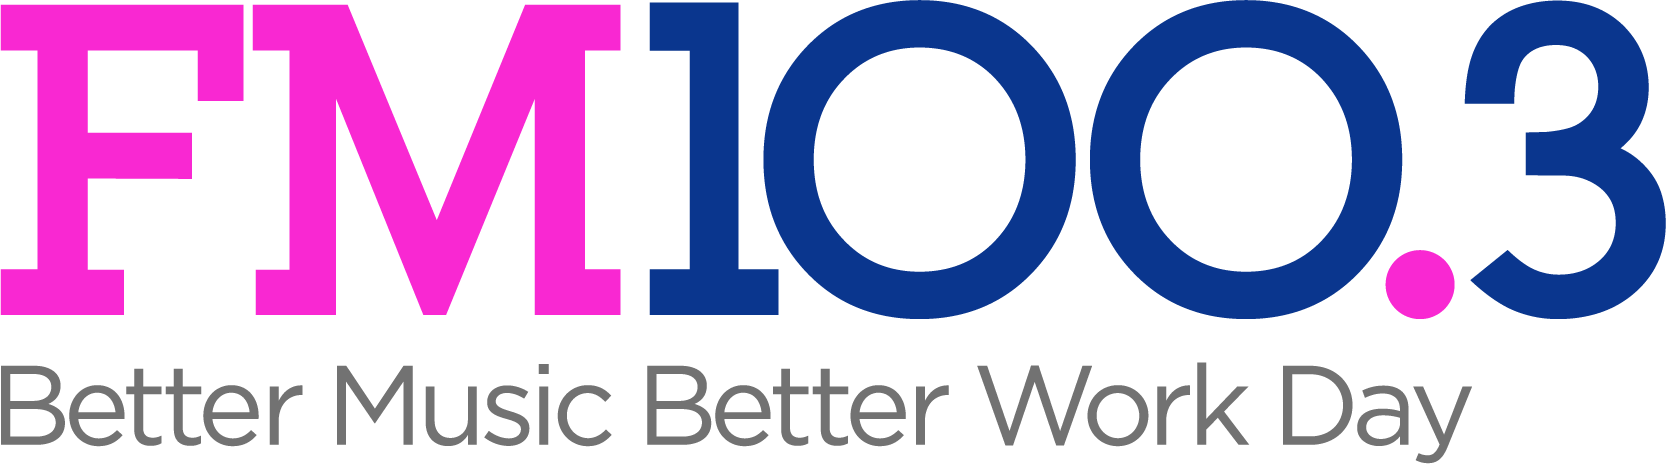 Listen LIVE - FM 100.3 - Better Music Better Work Day